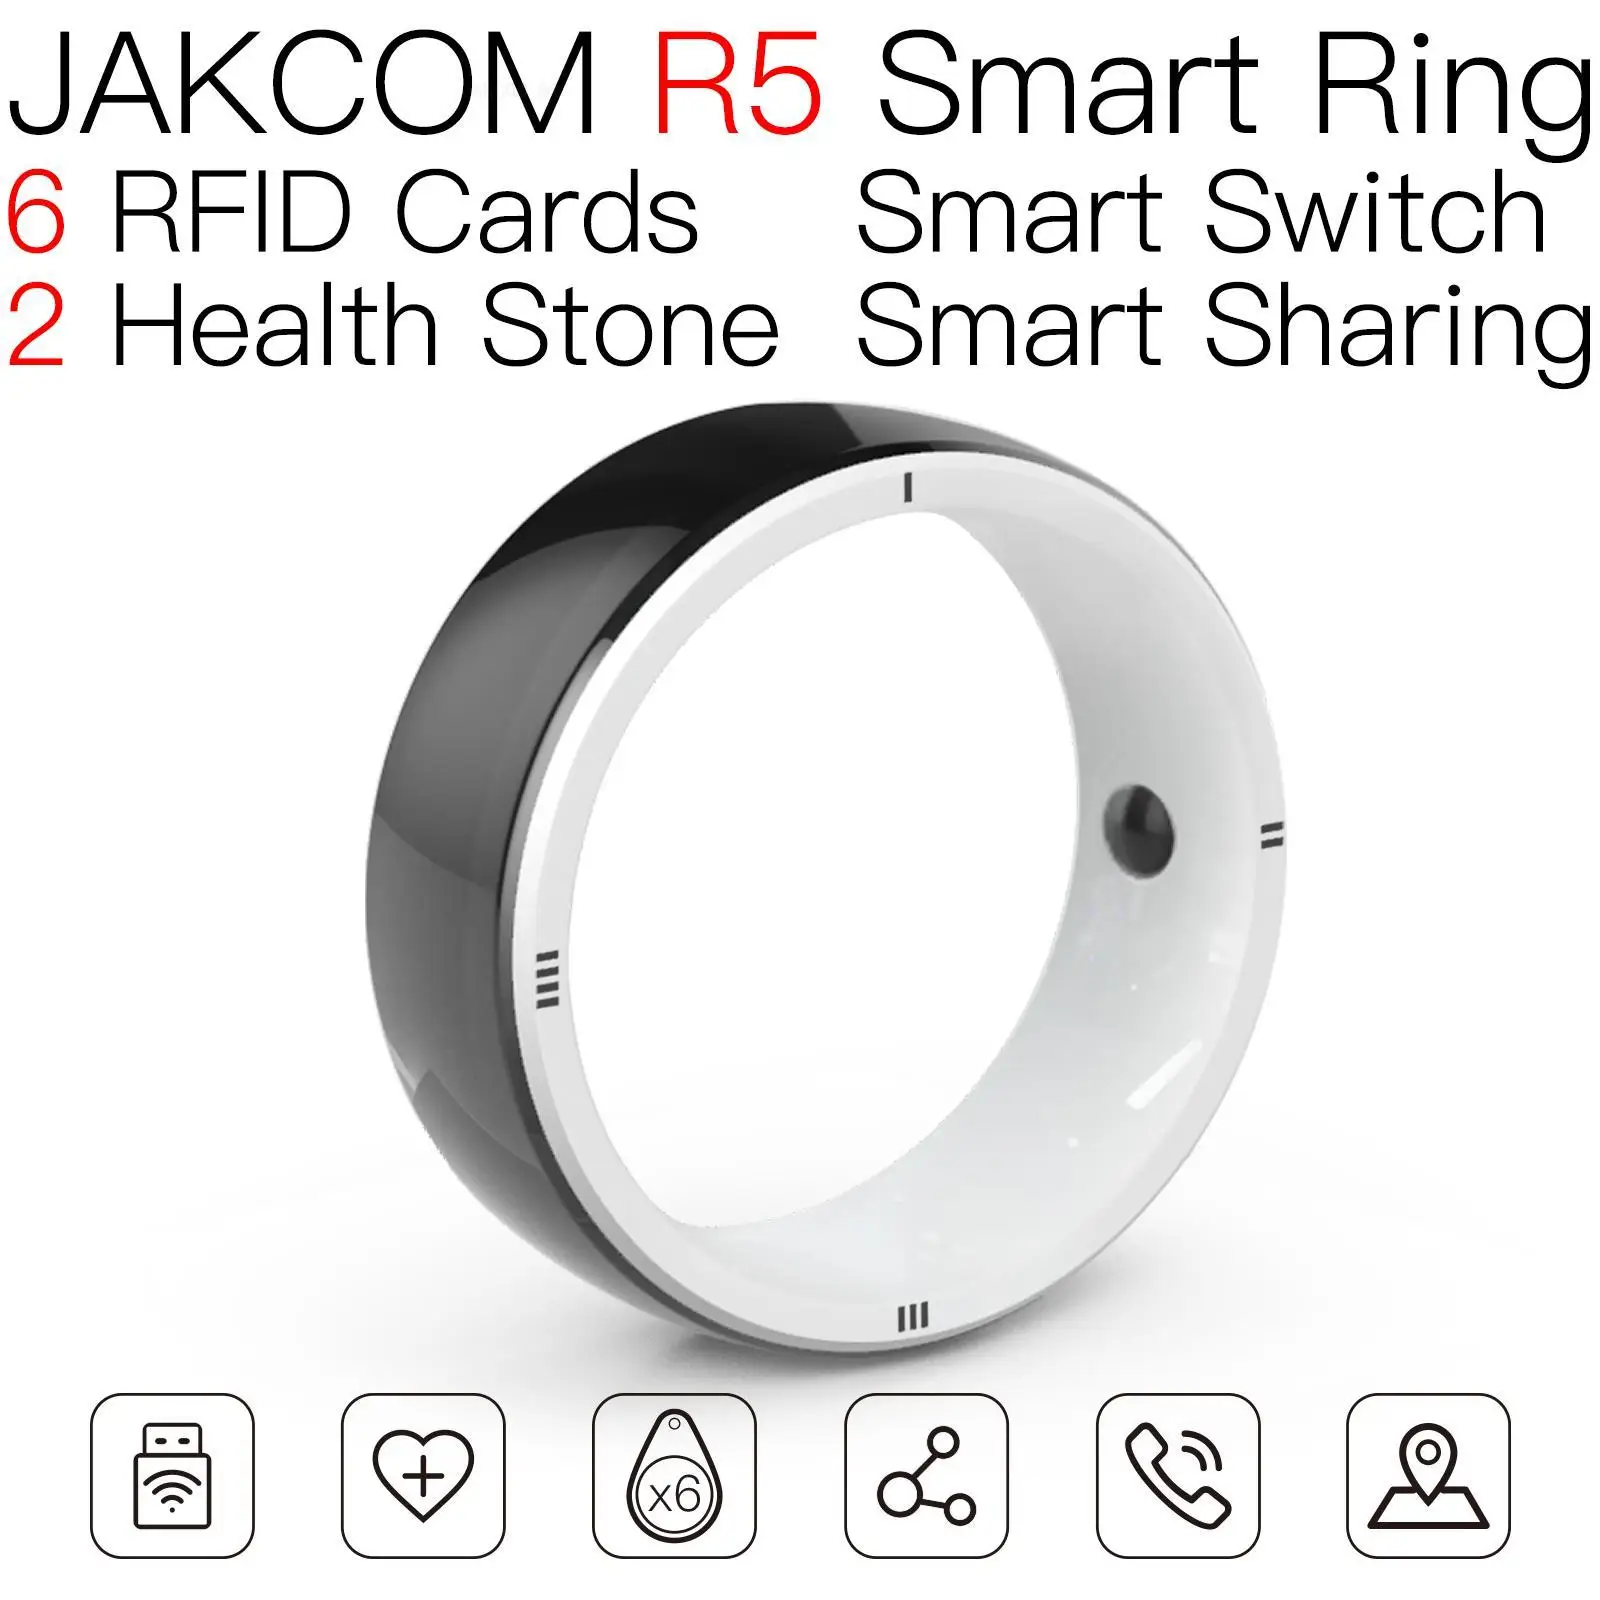 JAKCOM R5 Smart Ring Nice than switch juegos 125 khz rfid sticker uhf kill jordan 1 125khz antenna nfc tag 215 case